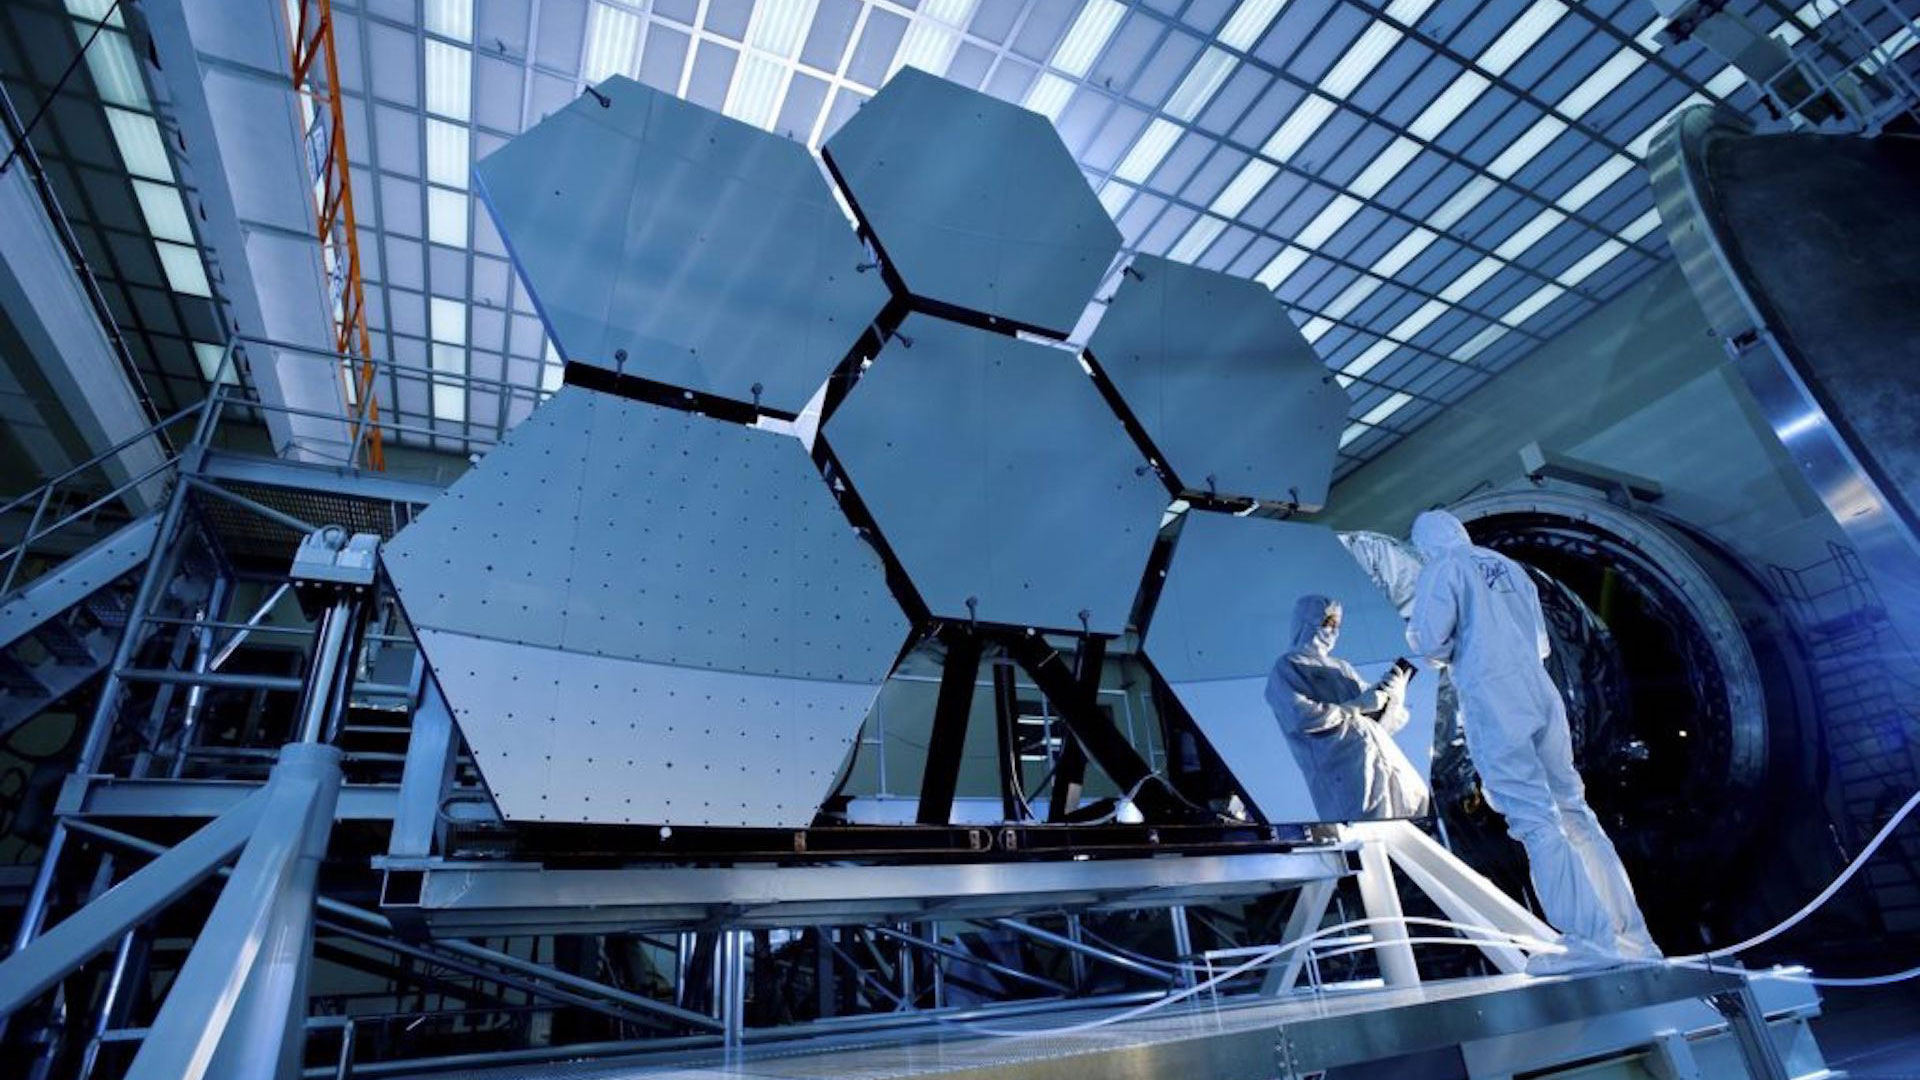 James Webb Space Telescope undergoes pre-launch testing.